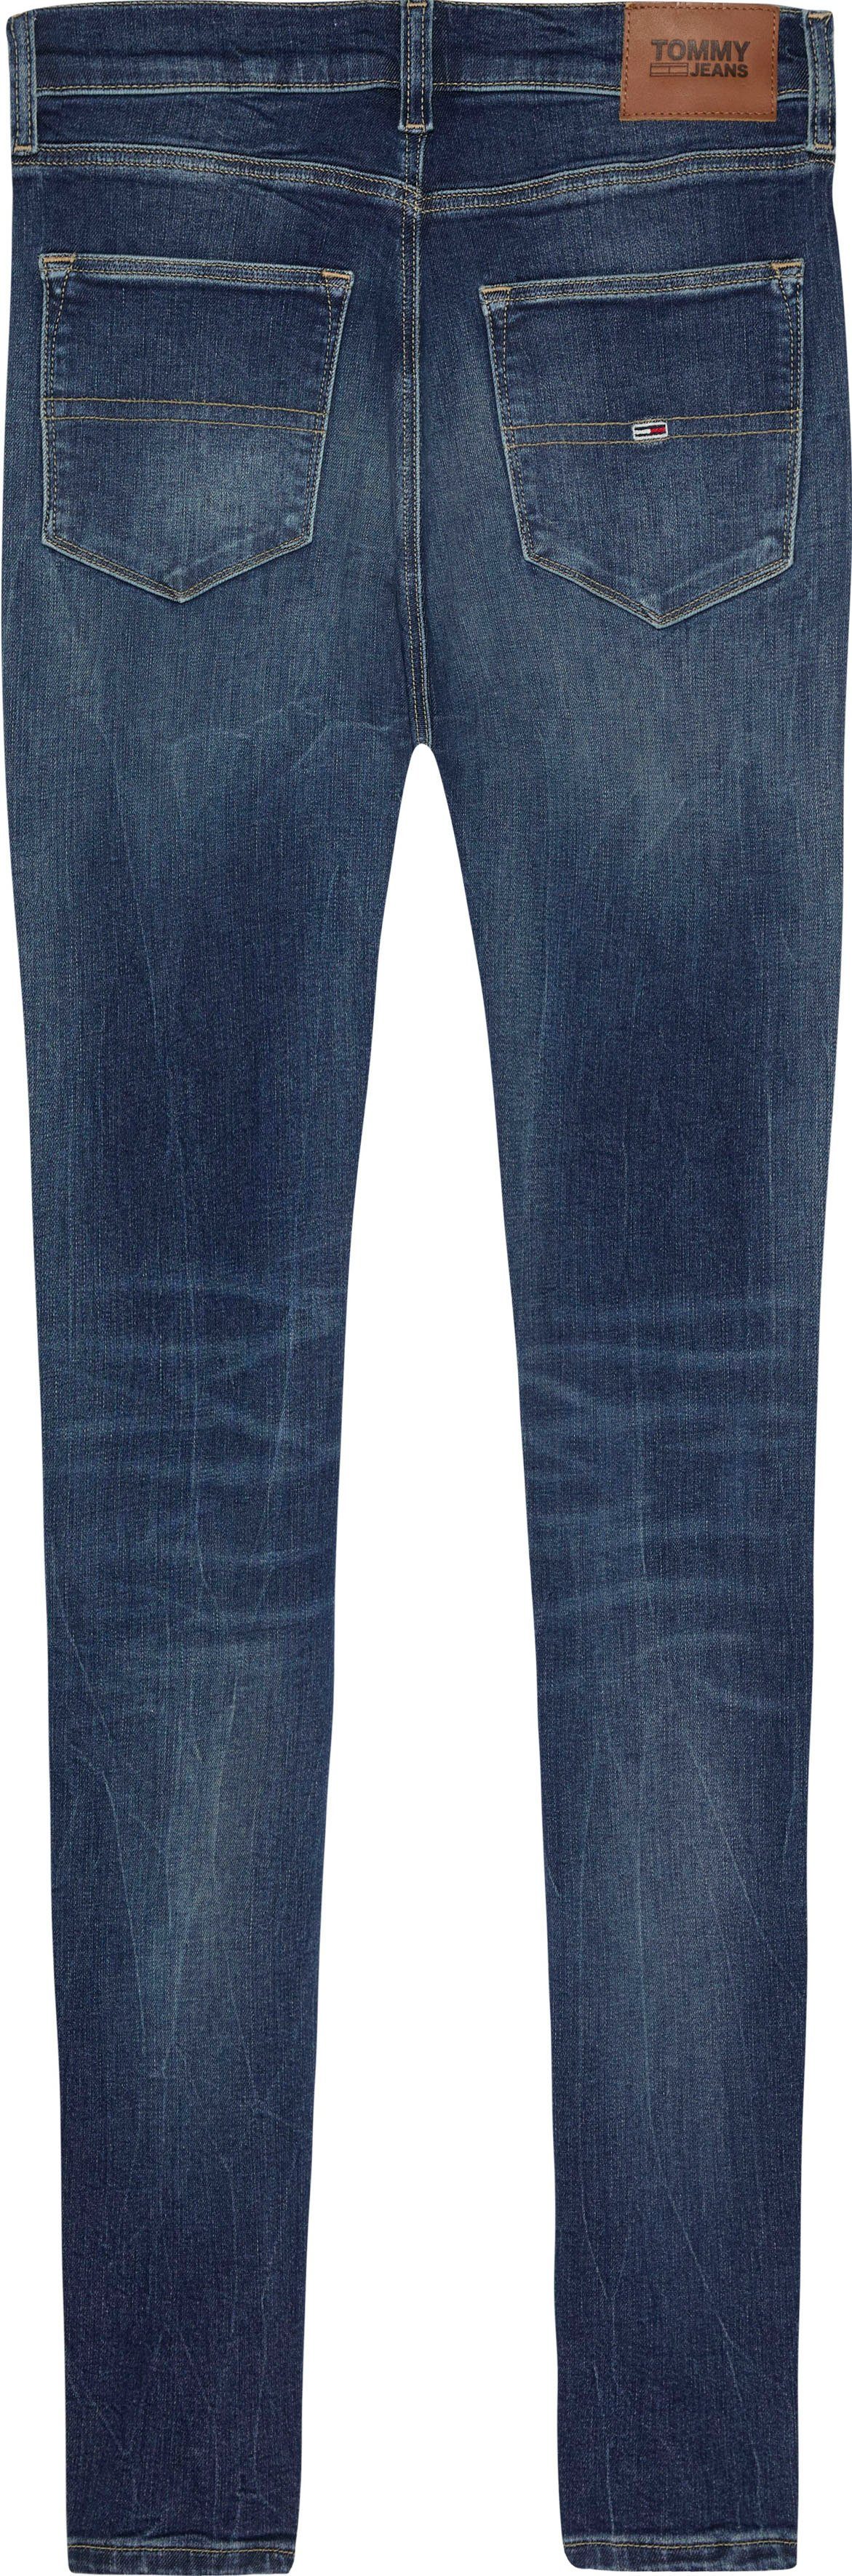 SSKN HR Jeans dark_denim1 und Jeans Skinny-fit-Jeans mit Tommy Logobadge SYLVIA Labelflags CG4